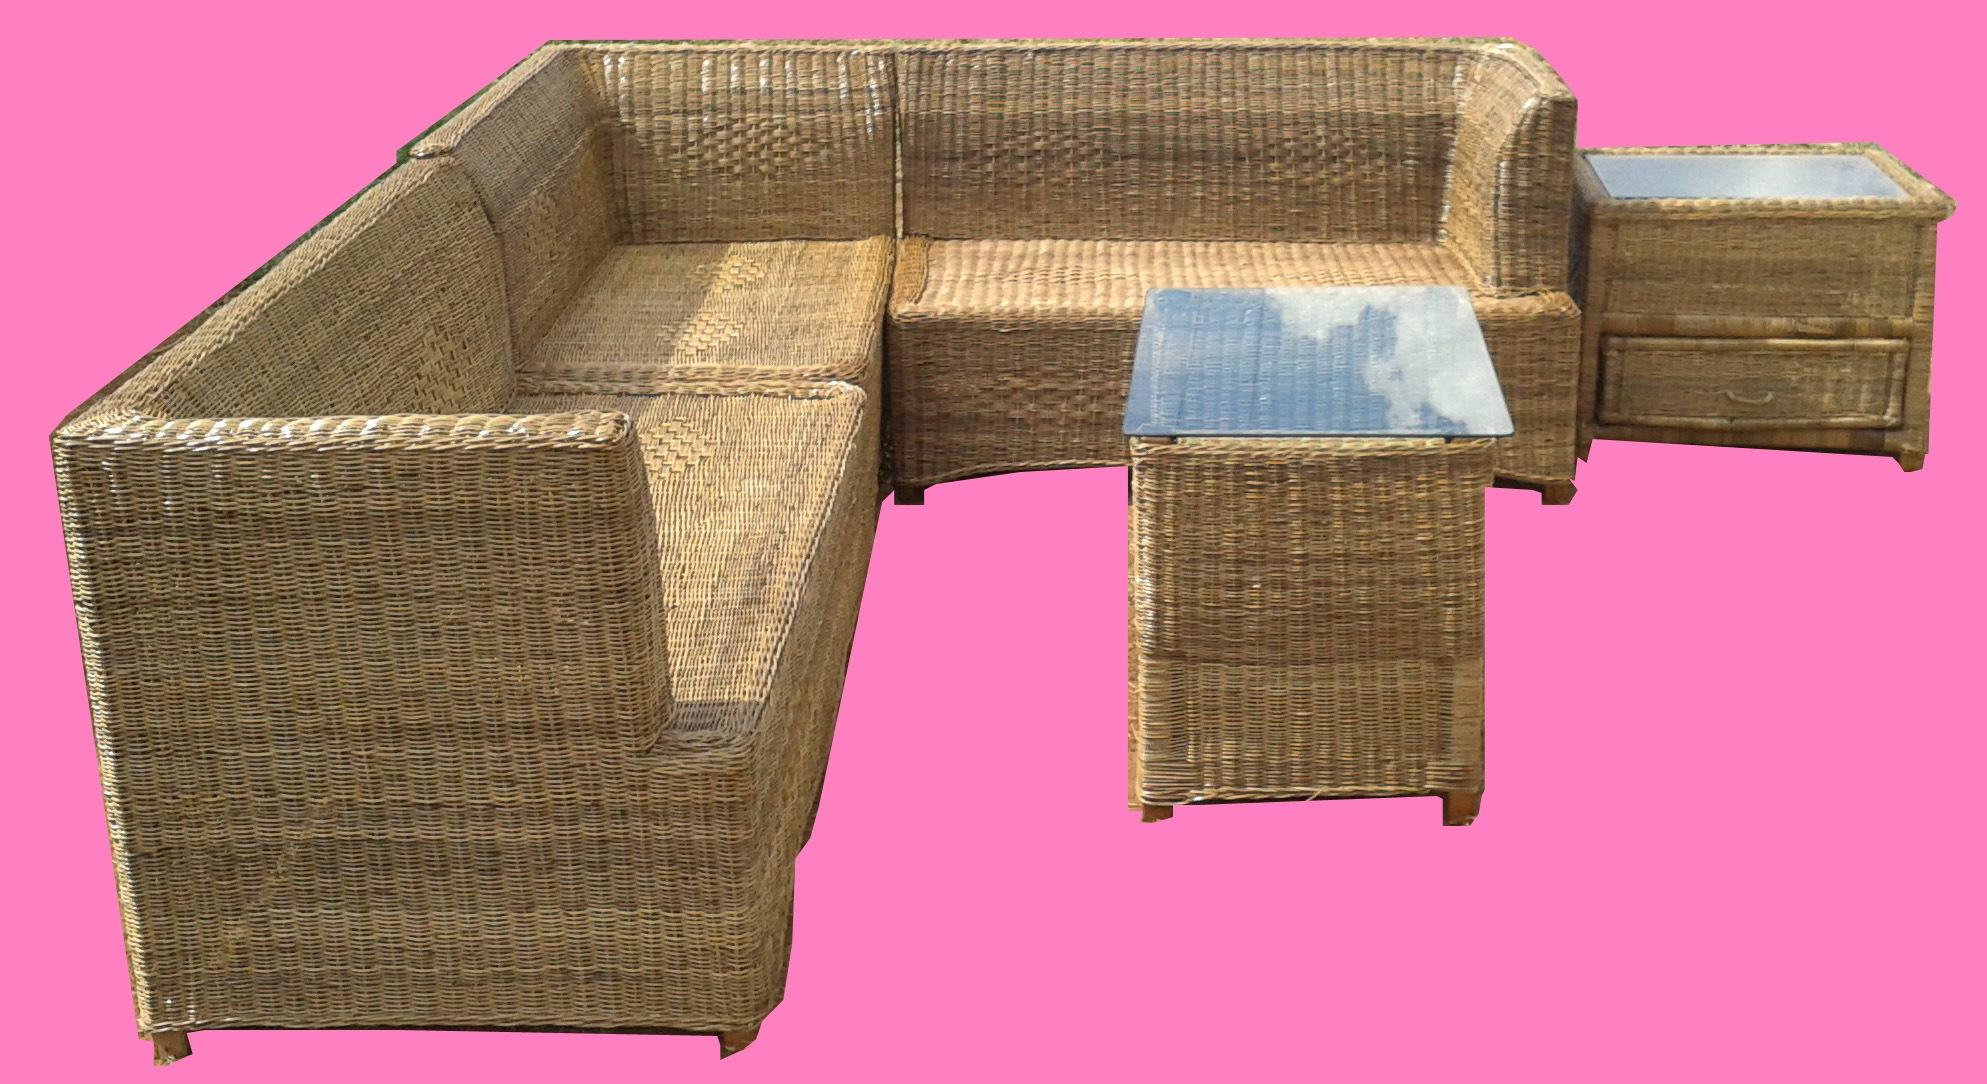 Malawian Cane furniture for Sale -Bulk Order of 20+ units